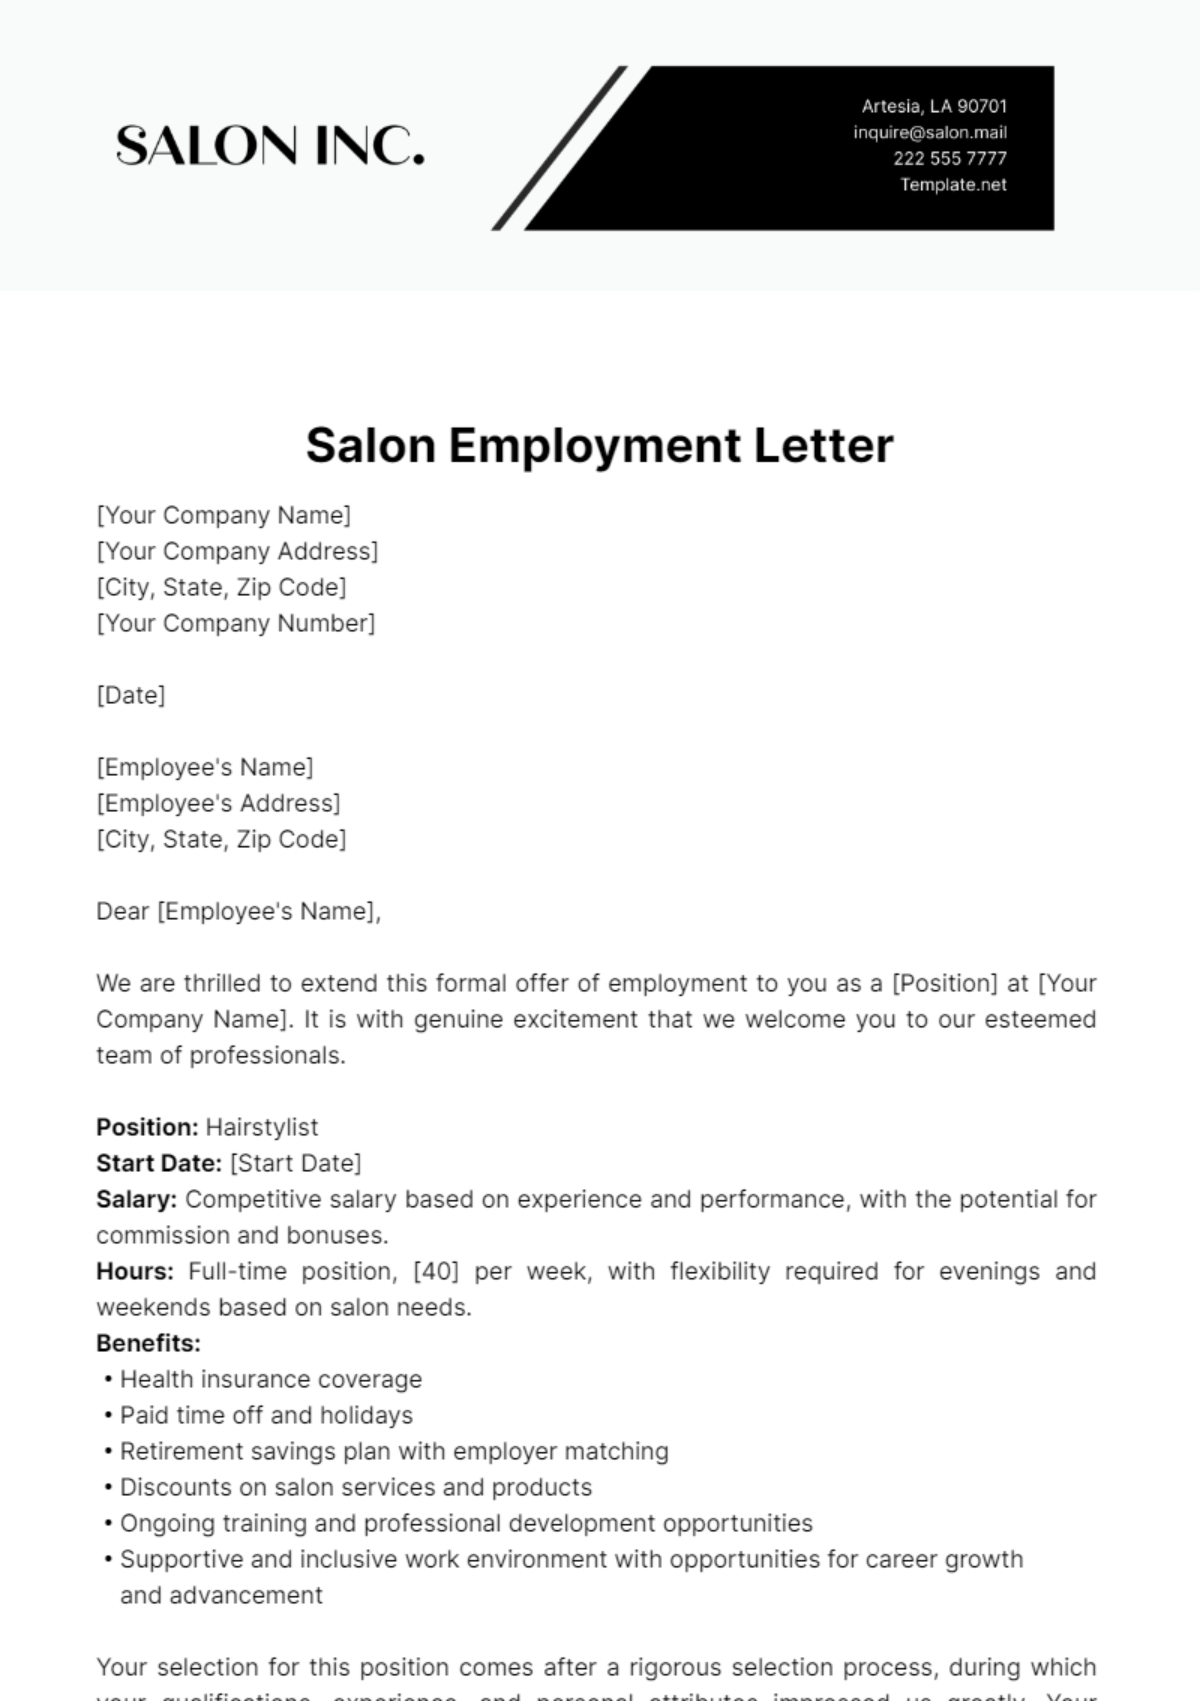 Salon Employment Letter Template